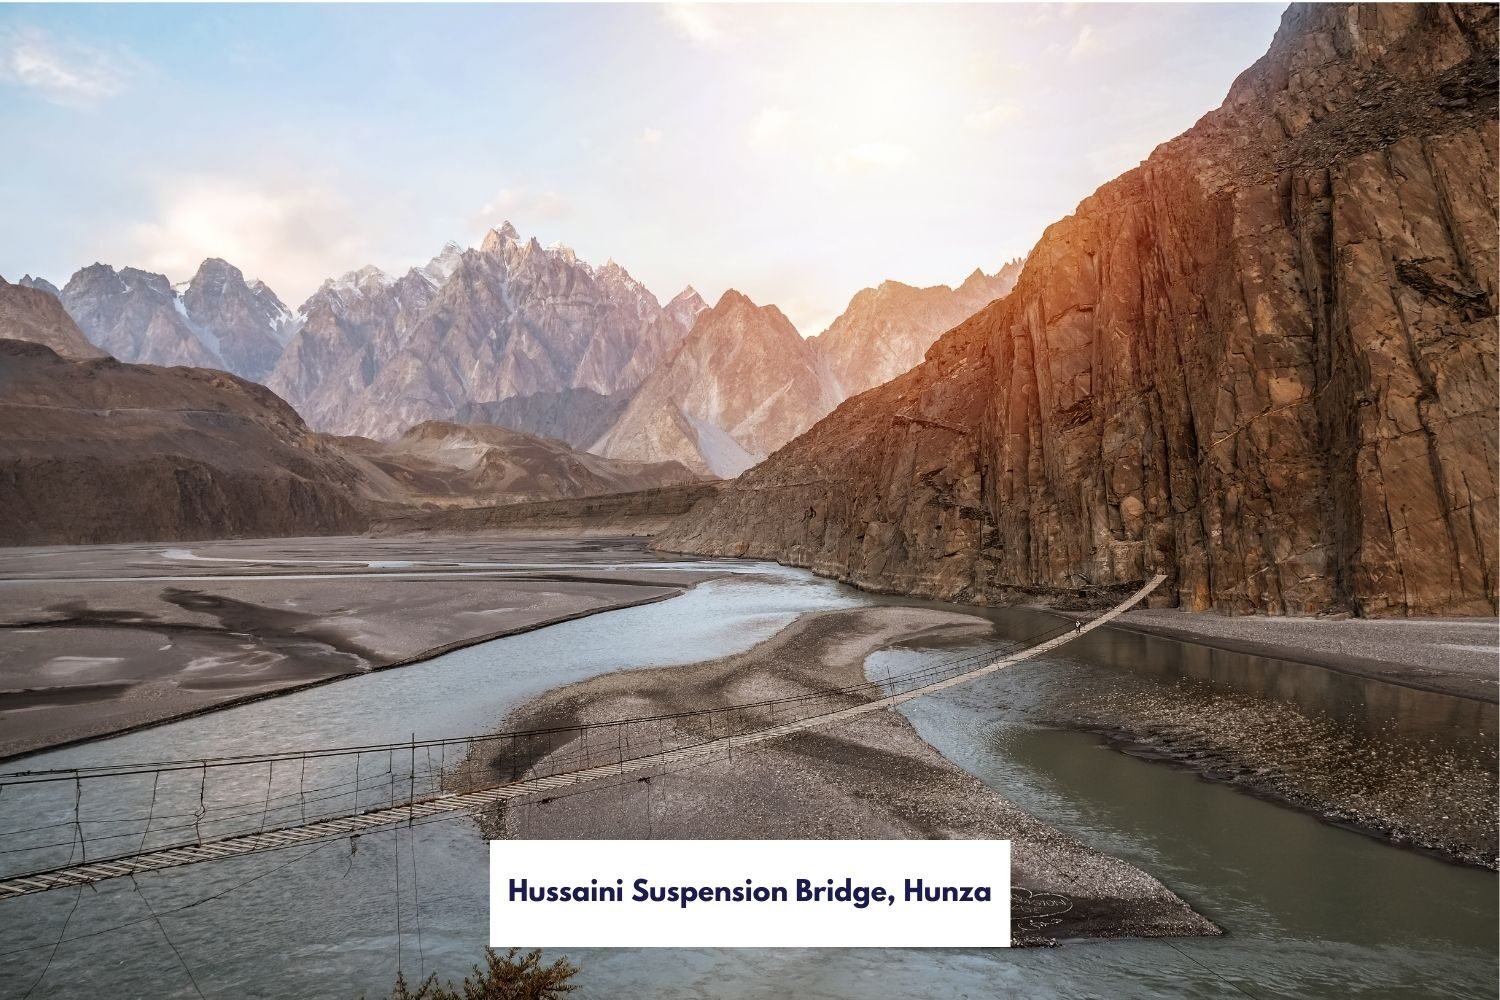 Hussaini Suspension Bridge, Hunza - trip-to-hunza - 1500x1000